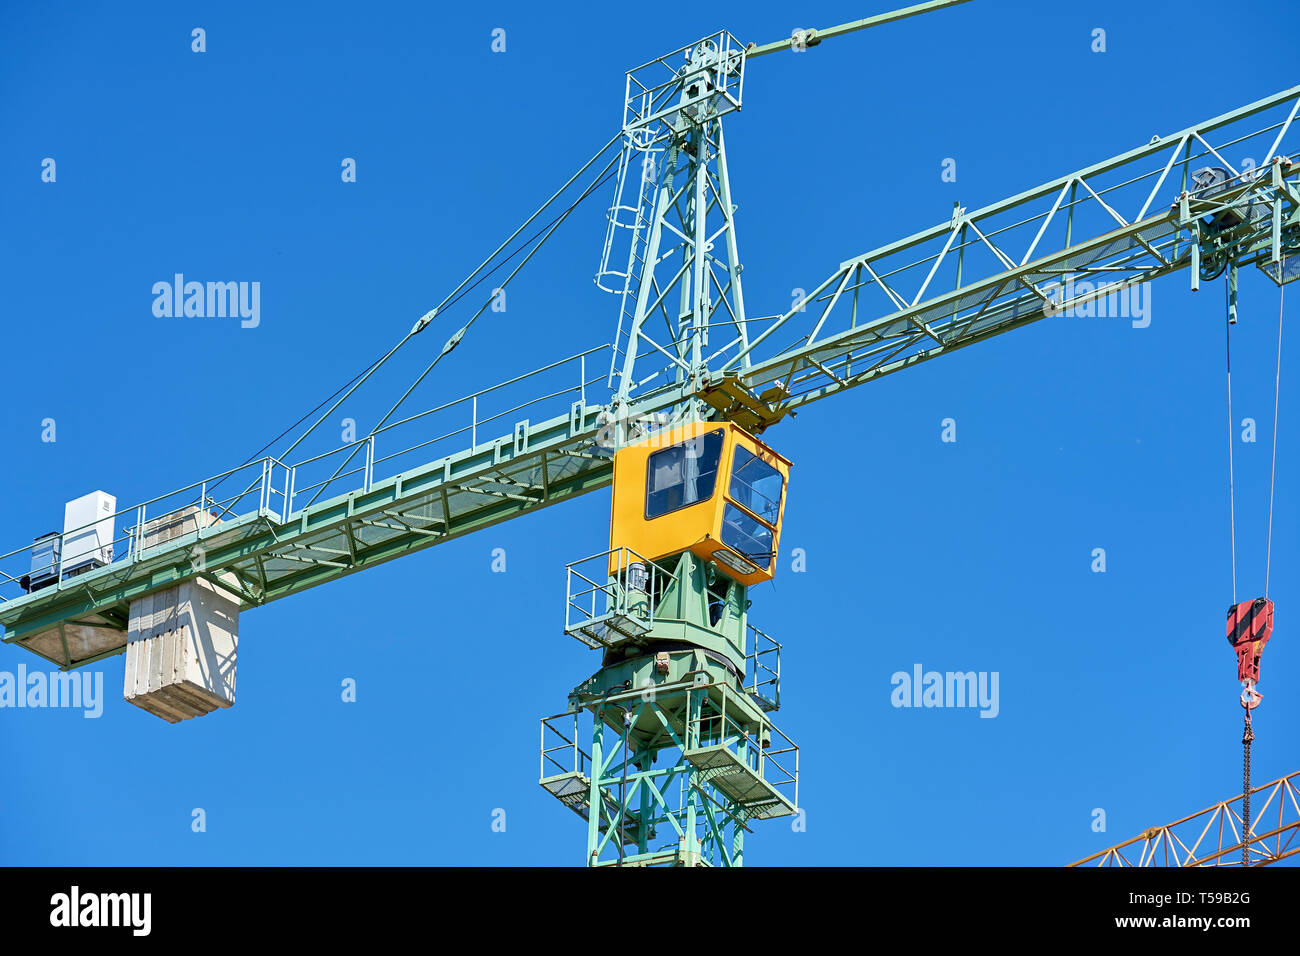 A crane on a construction site Stock Photo